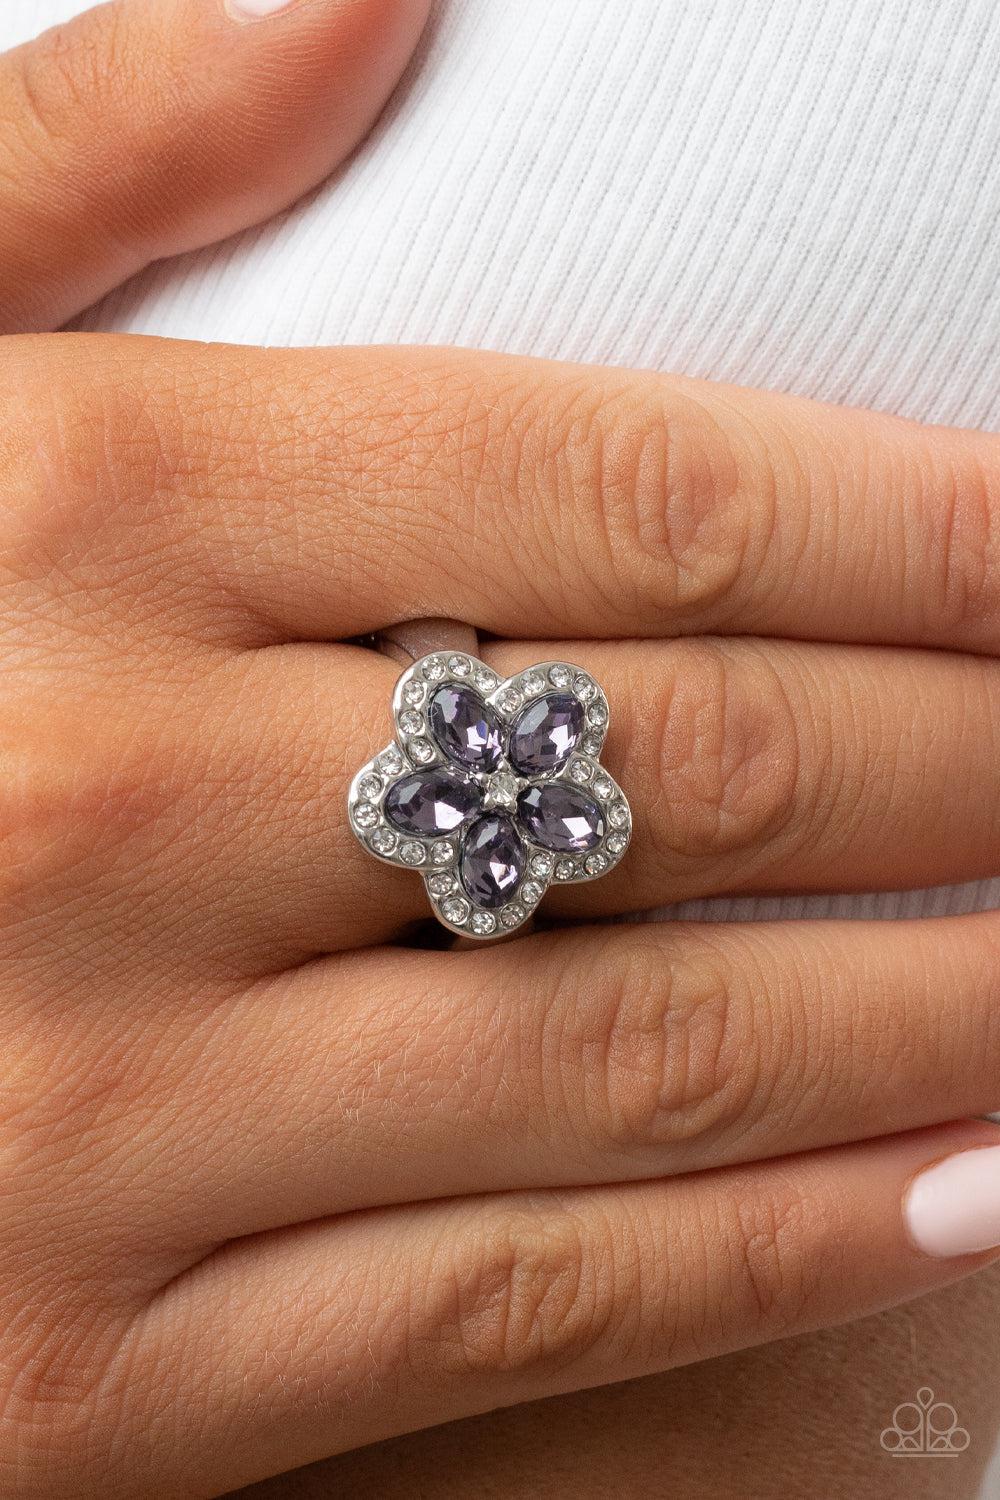 Efflorescent Envy Purple Rhinestone Flower Ring - Paparazzi Accessories- lightbox - CarasShop.com - $5 Jewelry by Cara Jewels